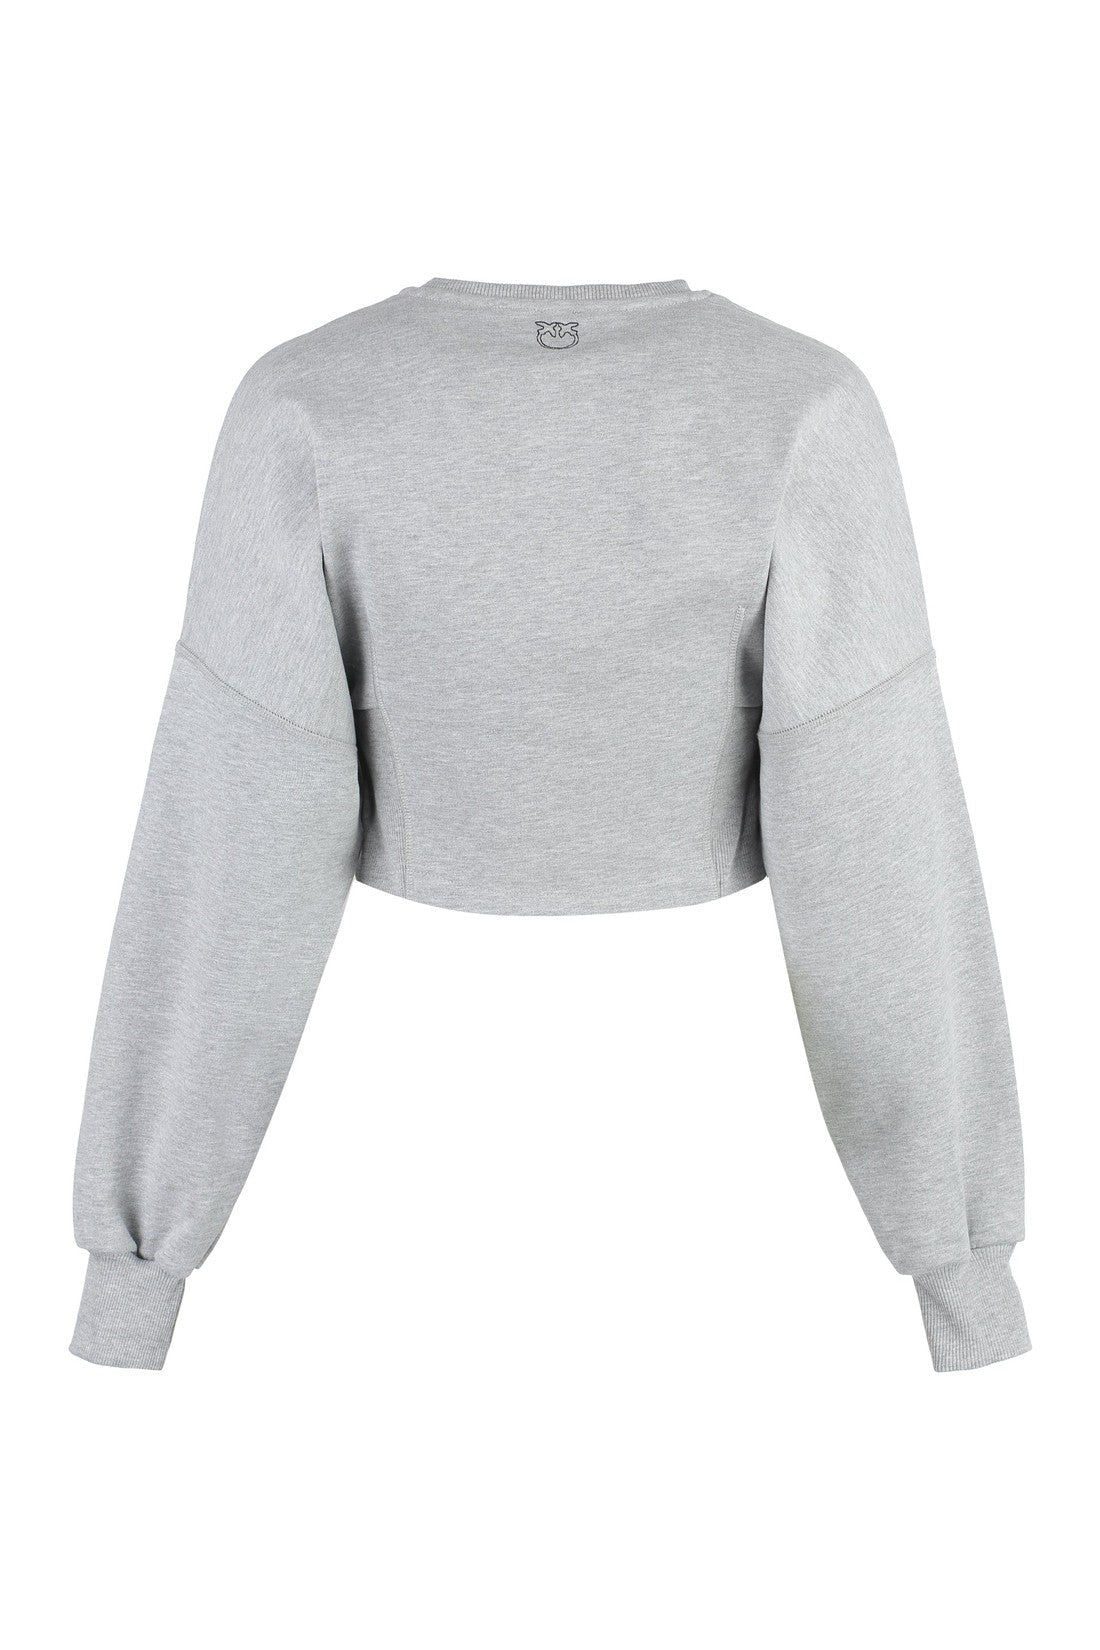 Pinko-OUTLET-SALE-Cotton crew-neck sweatshirt-ARCHIVIST